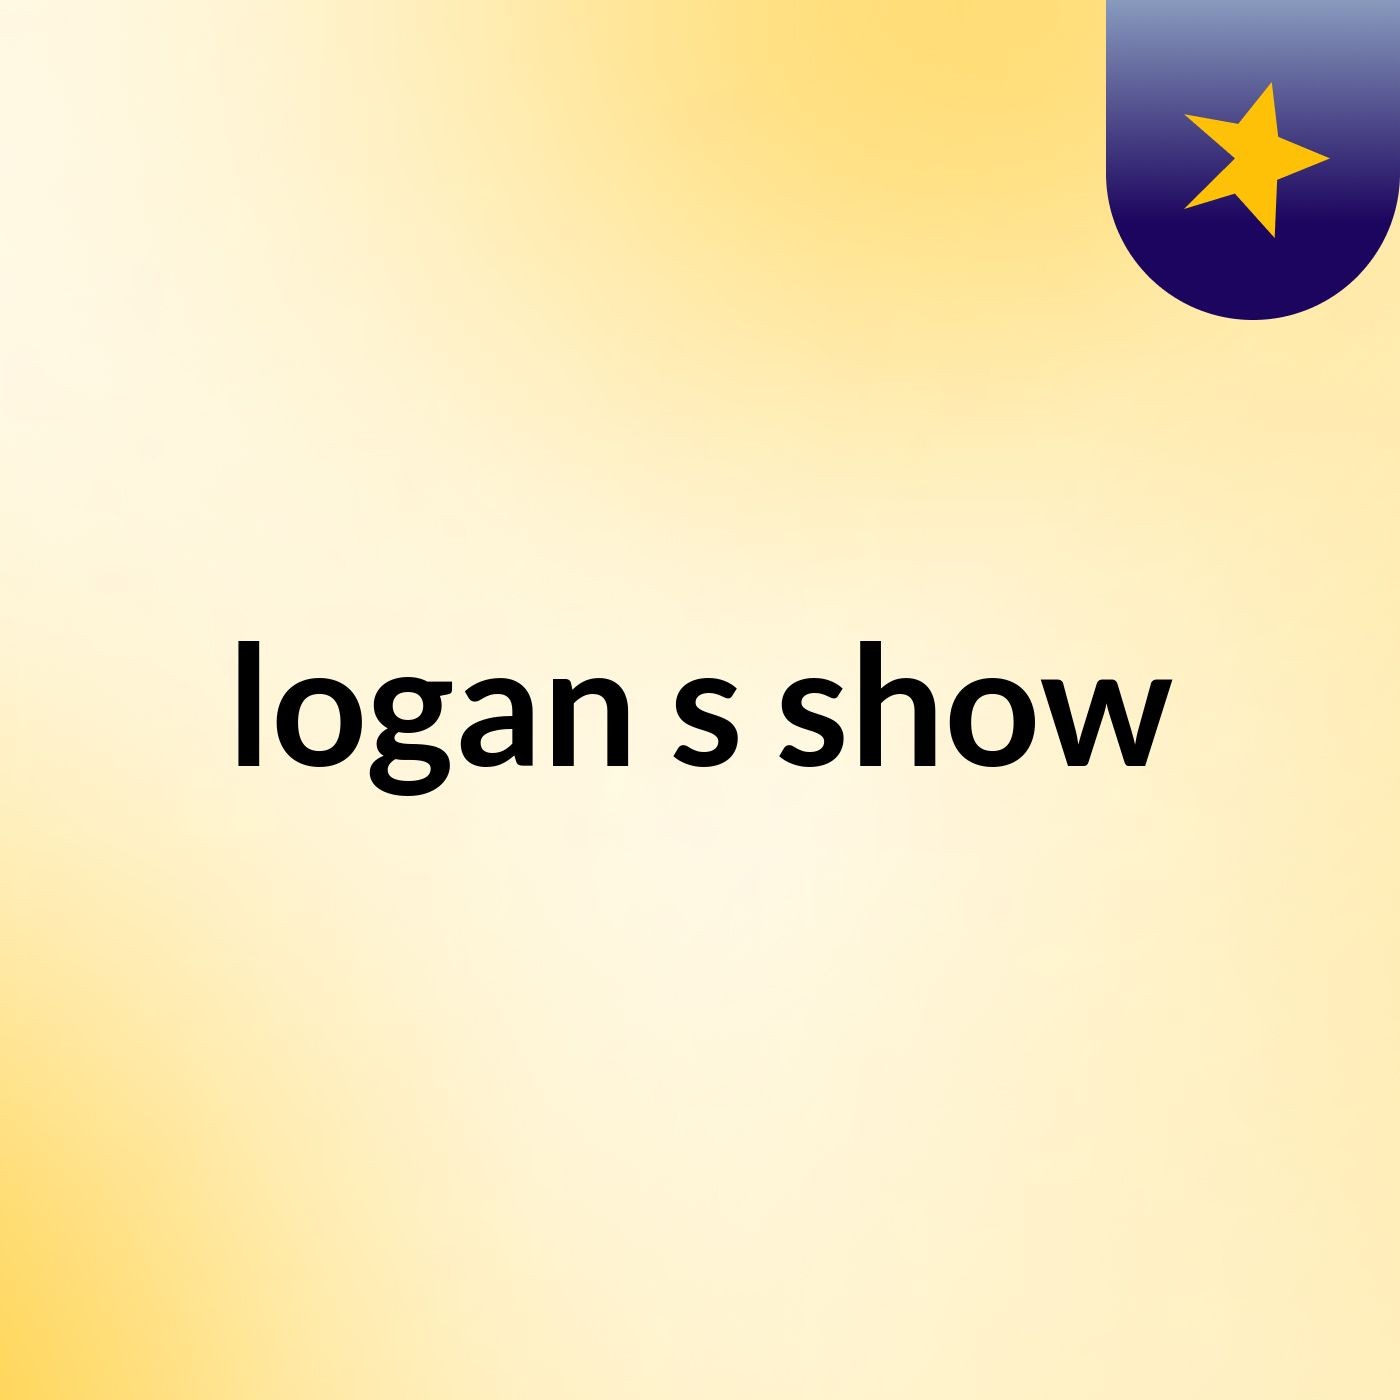 logan's show